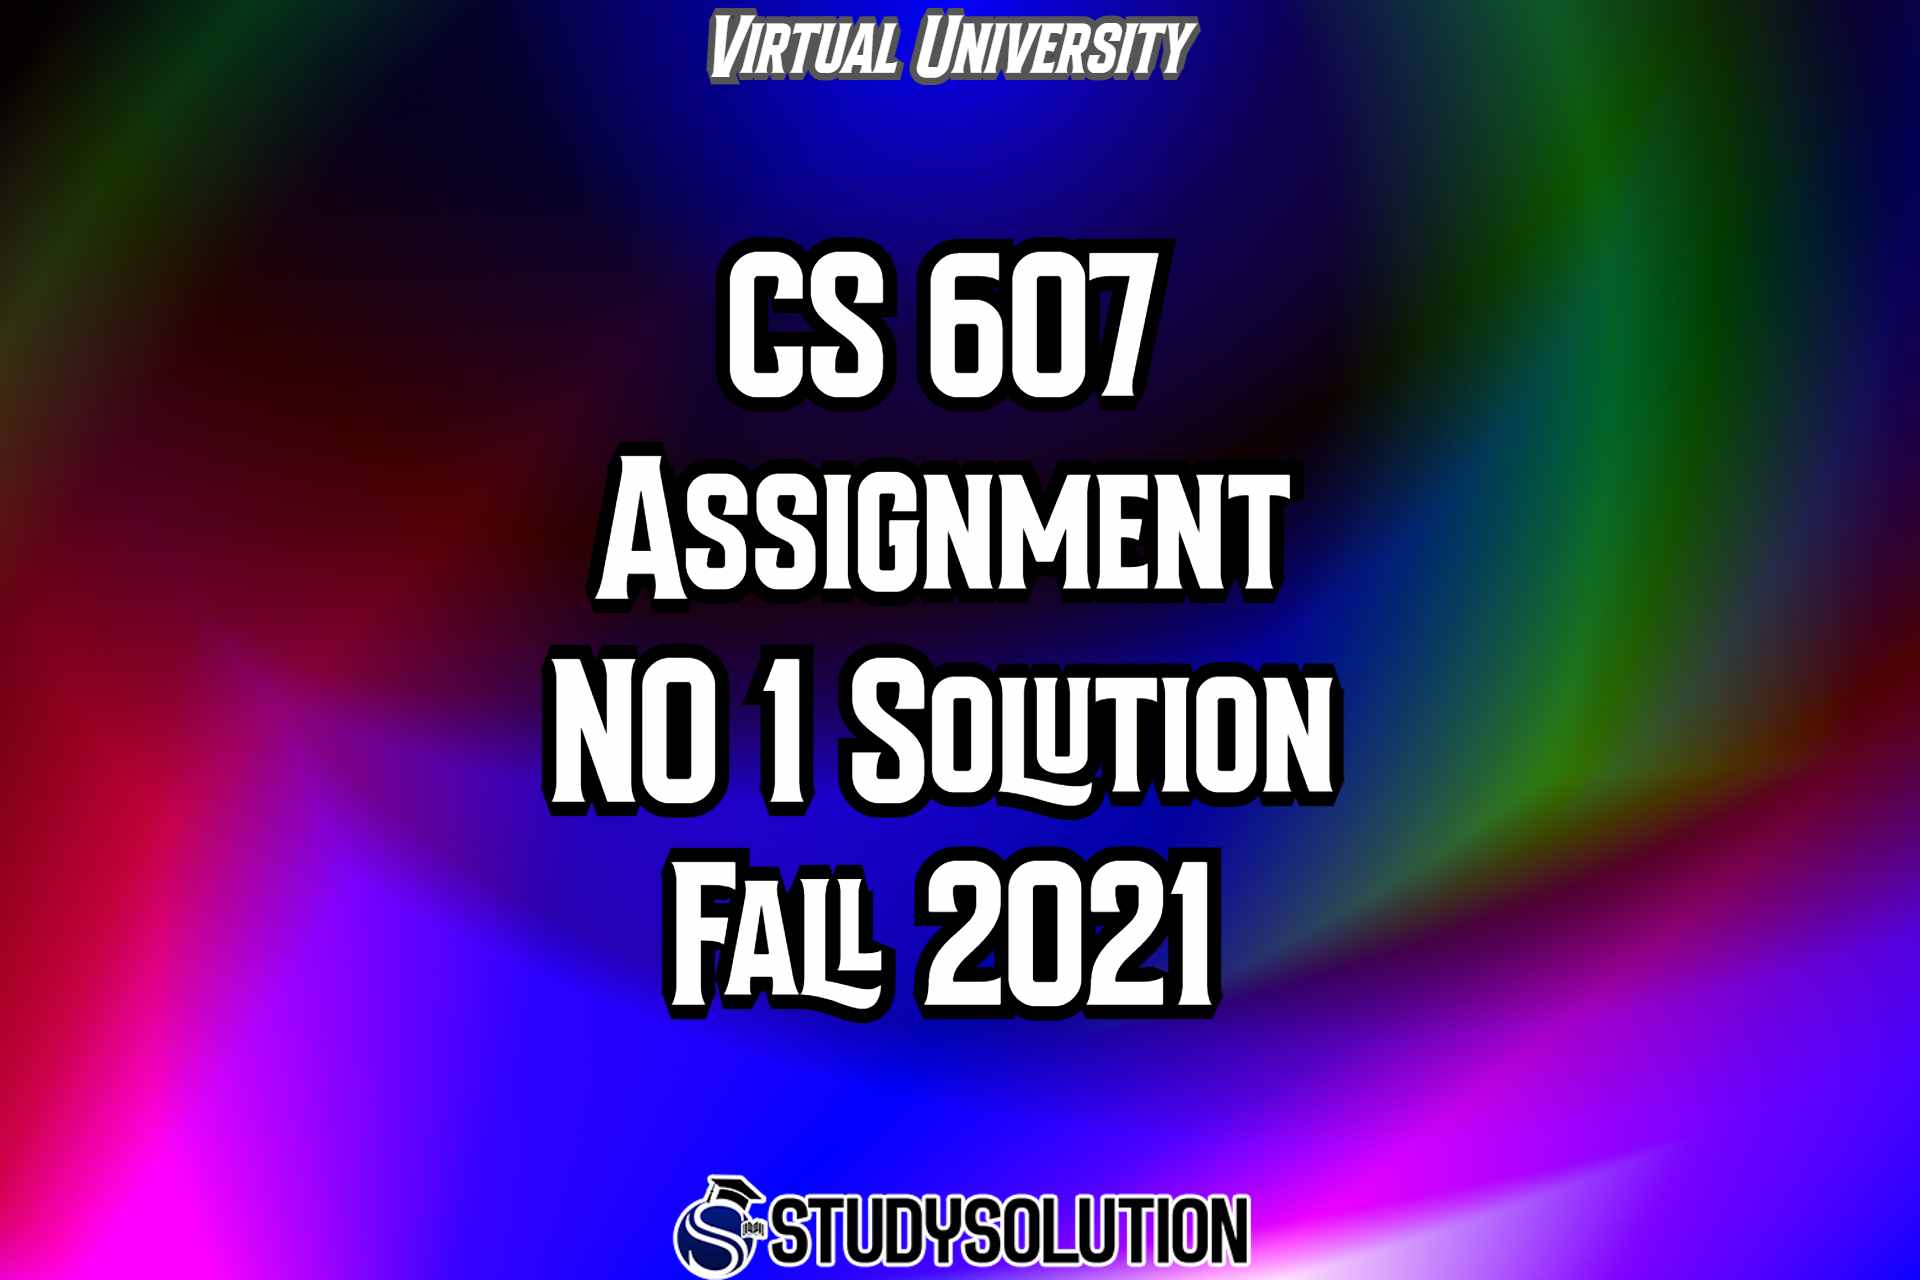 CS607 Assignment NO 1 Solution Fall 2021